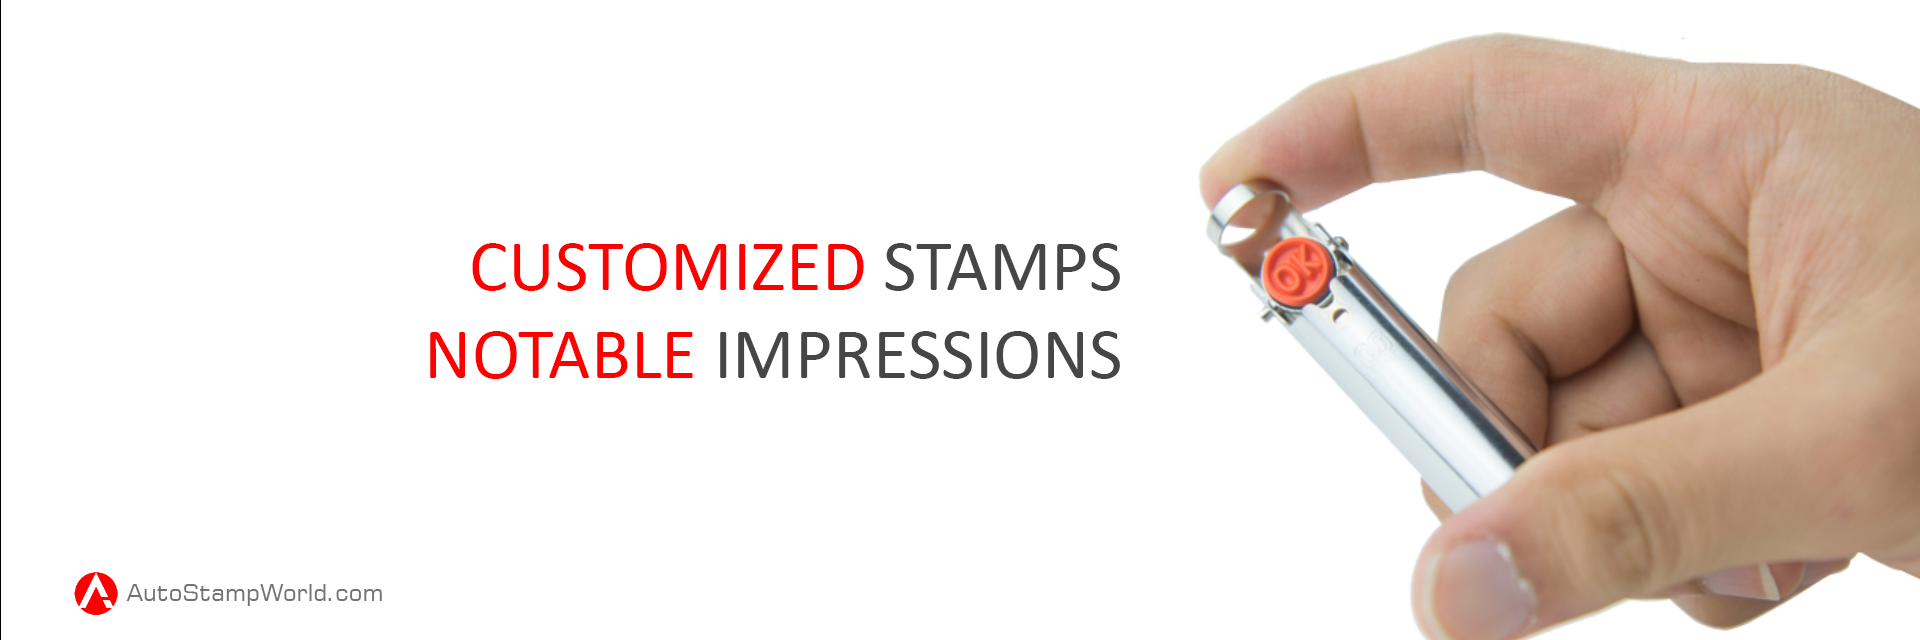 Customized Stamp